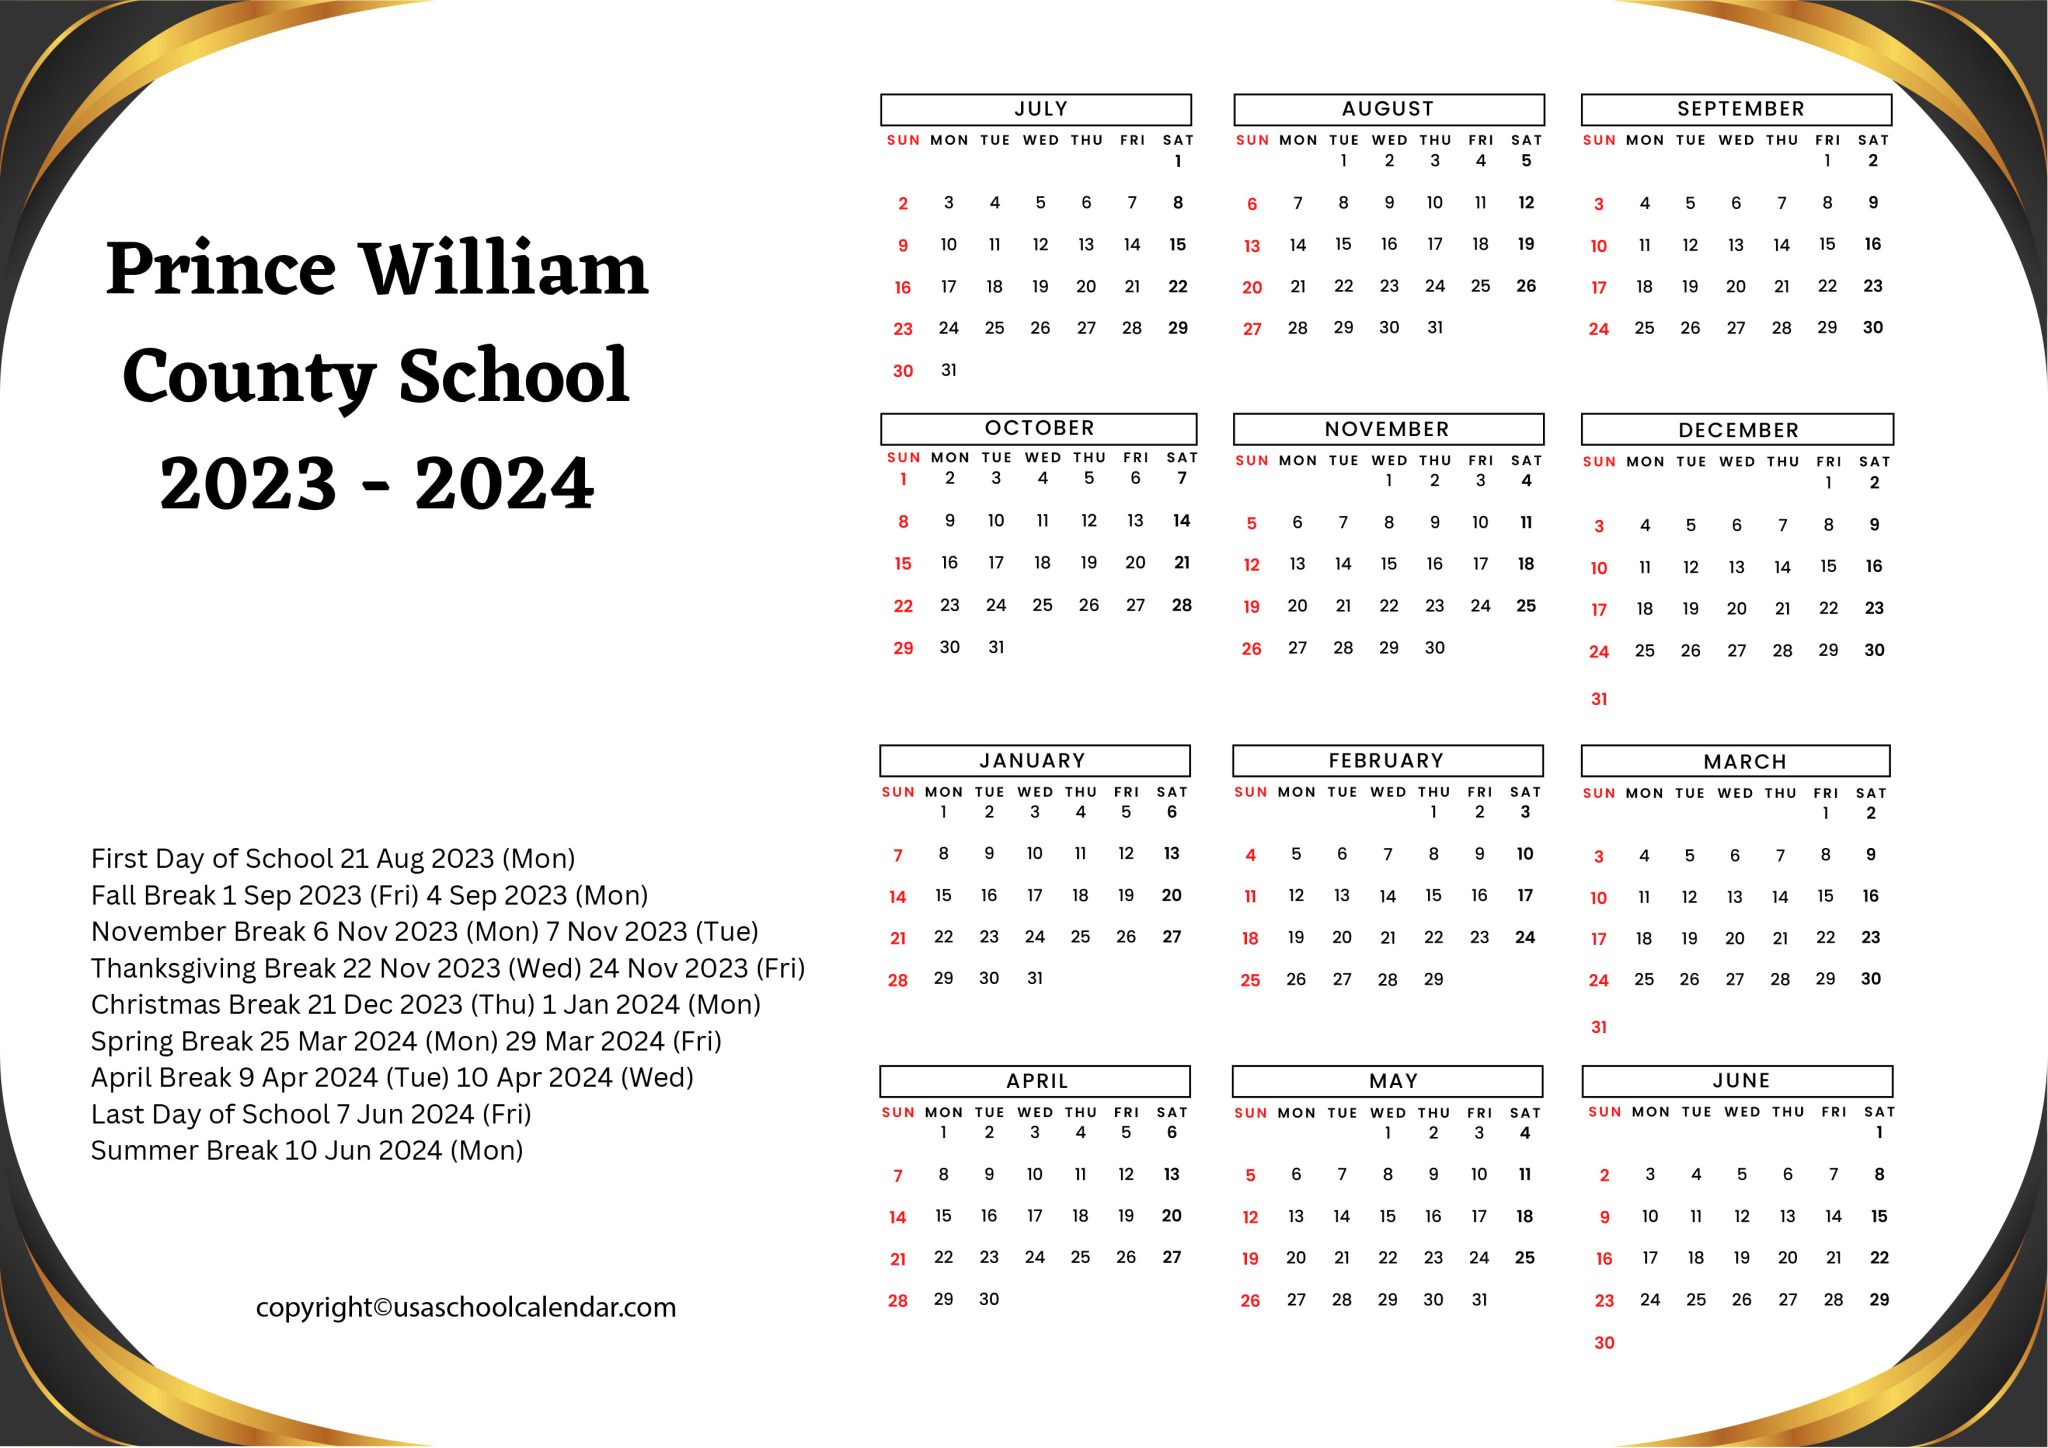 prince-william-county-school-calendar-holidays-2023-2024